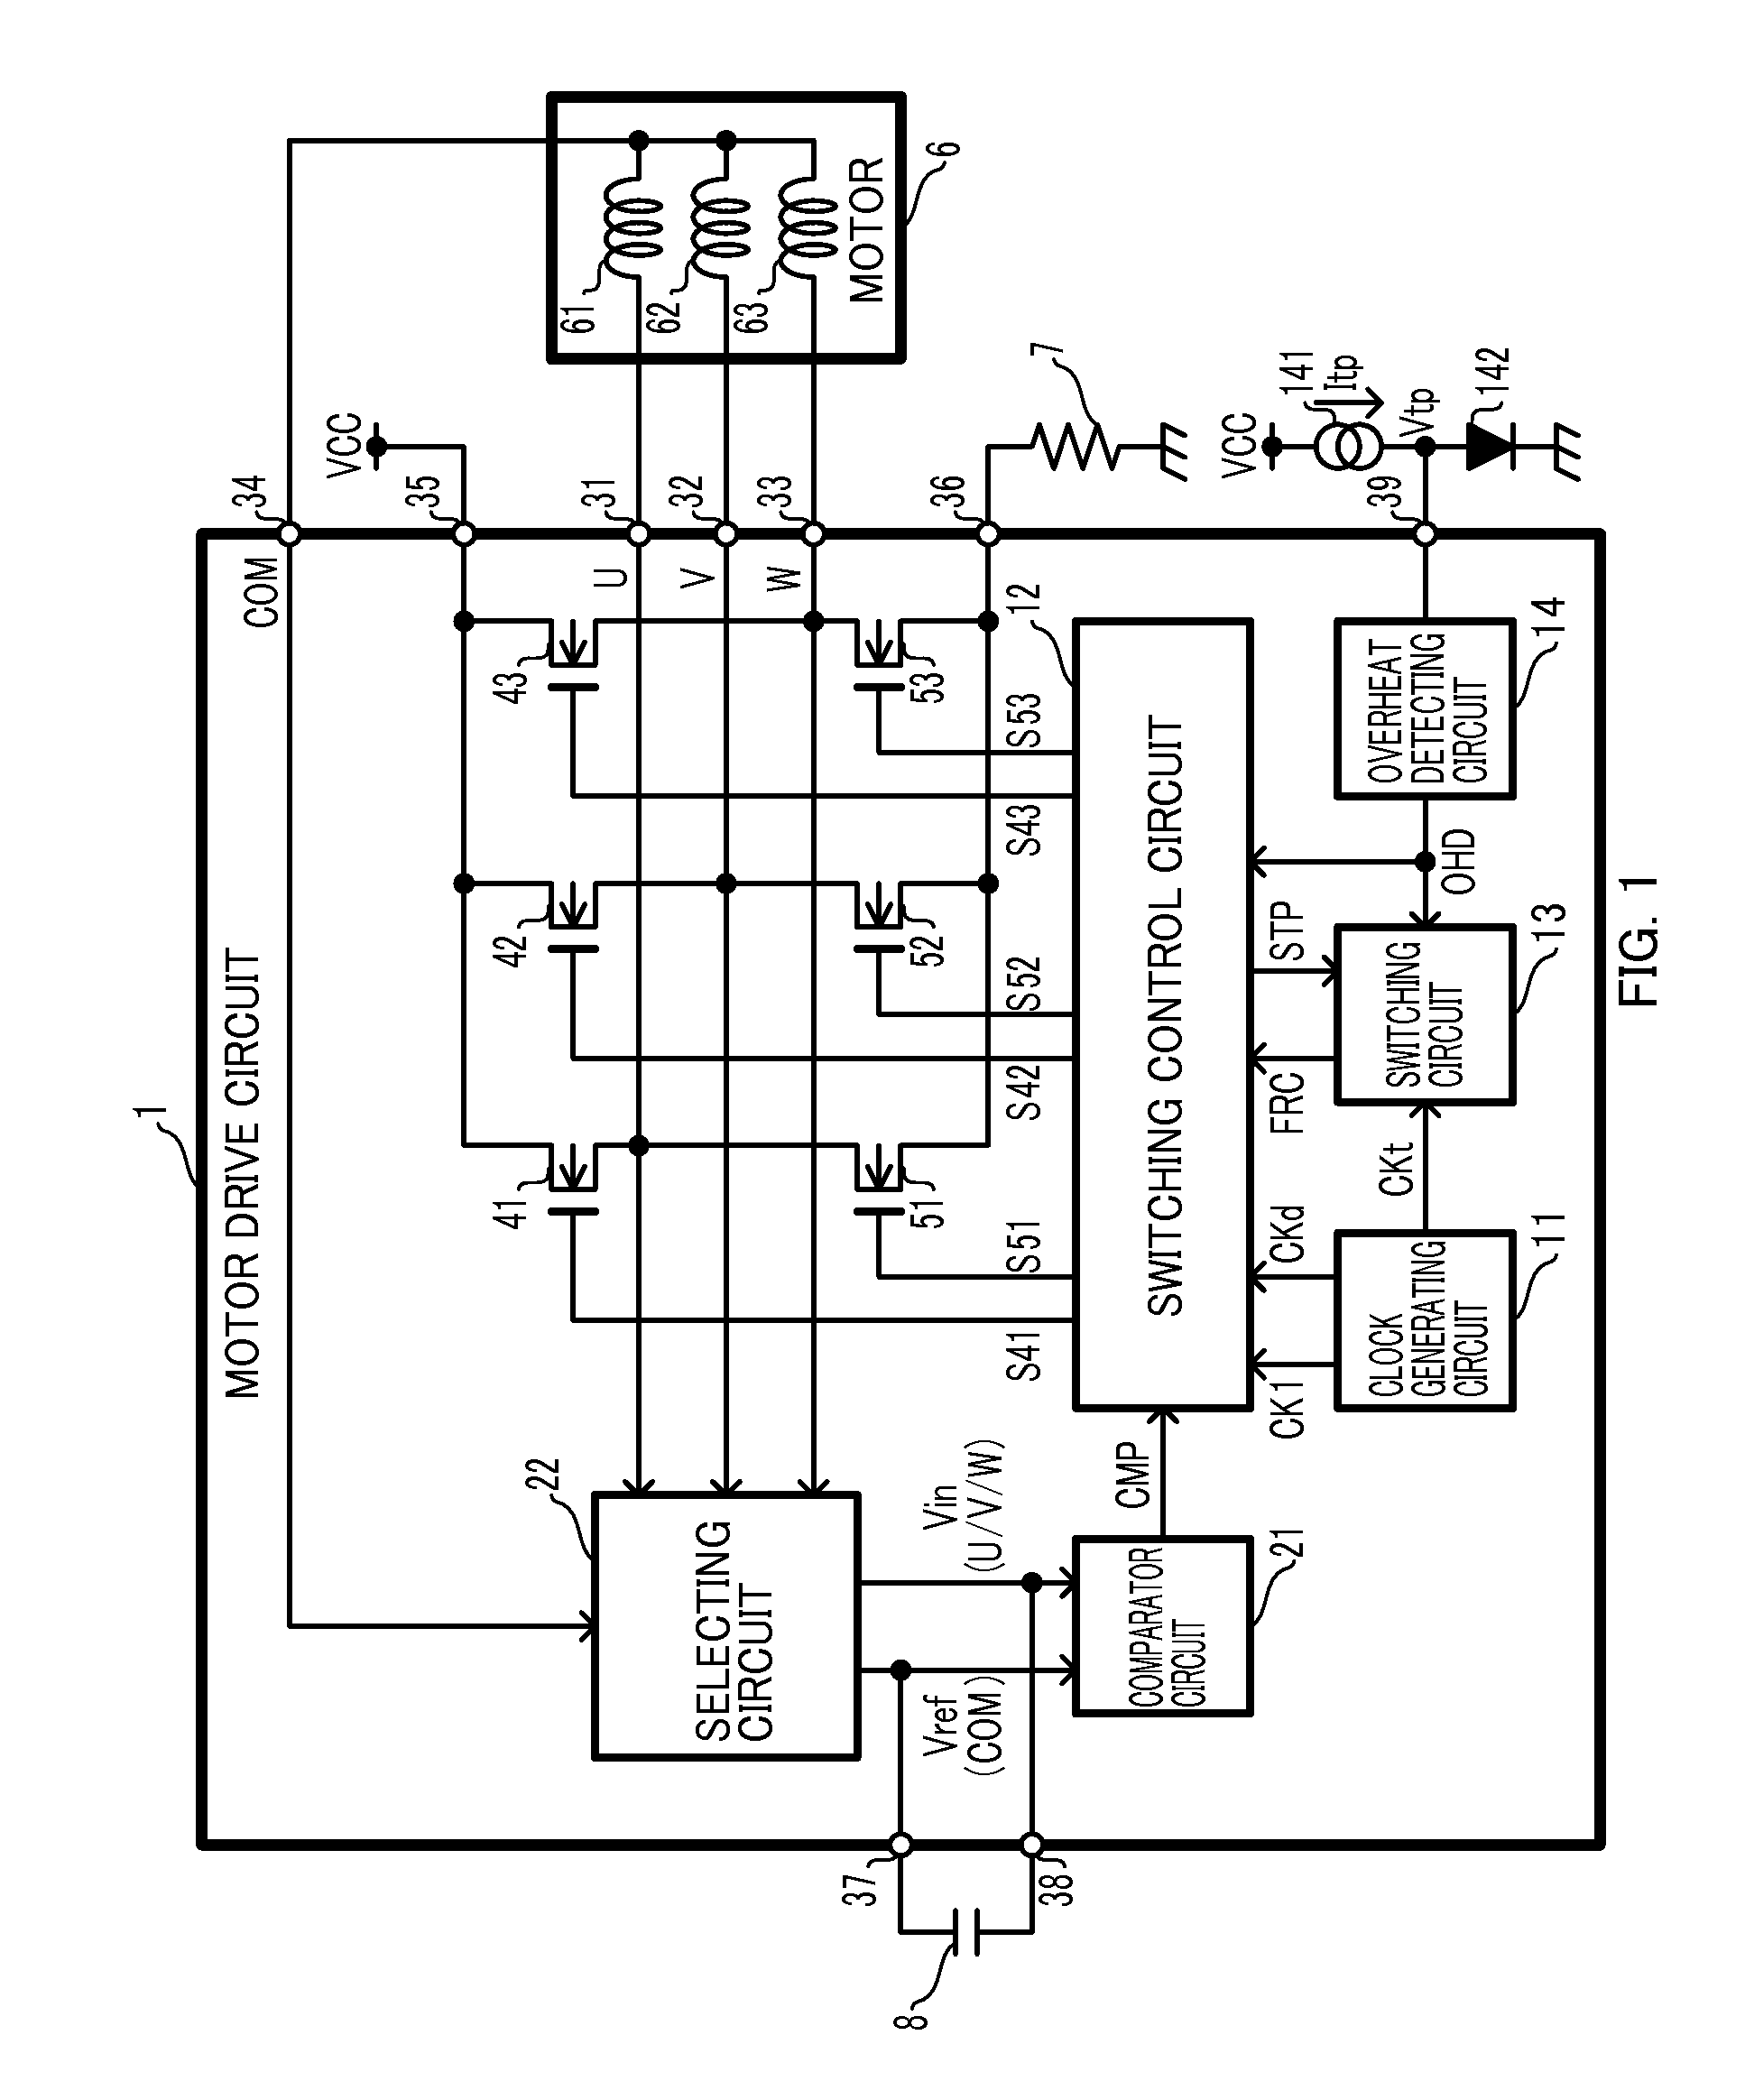 Motor drive circuit and illumination apparatus